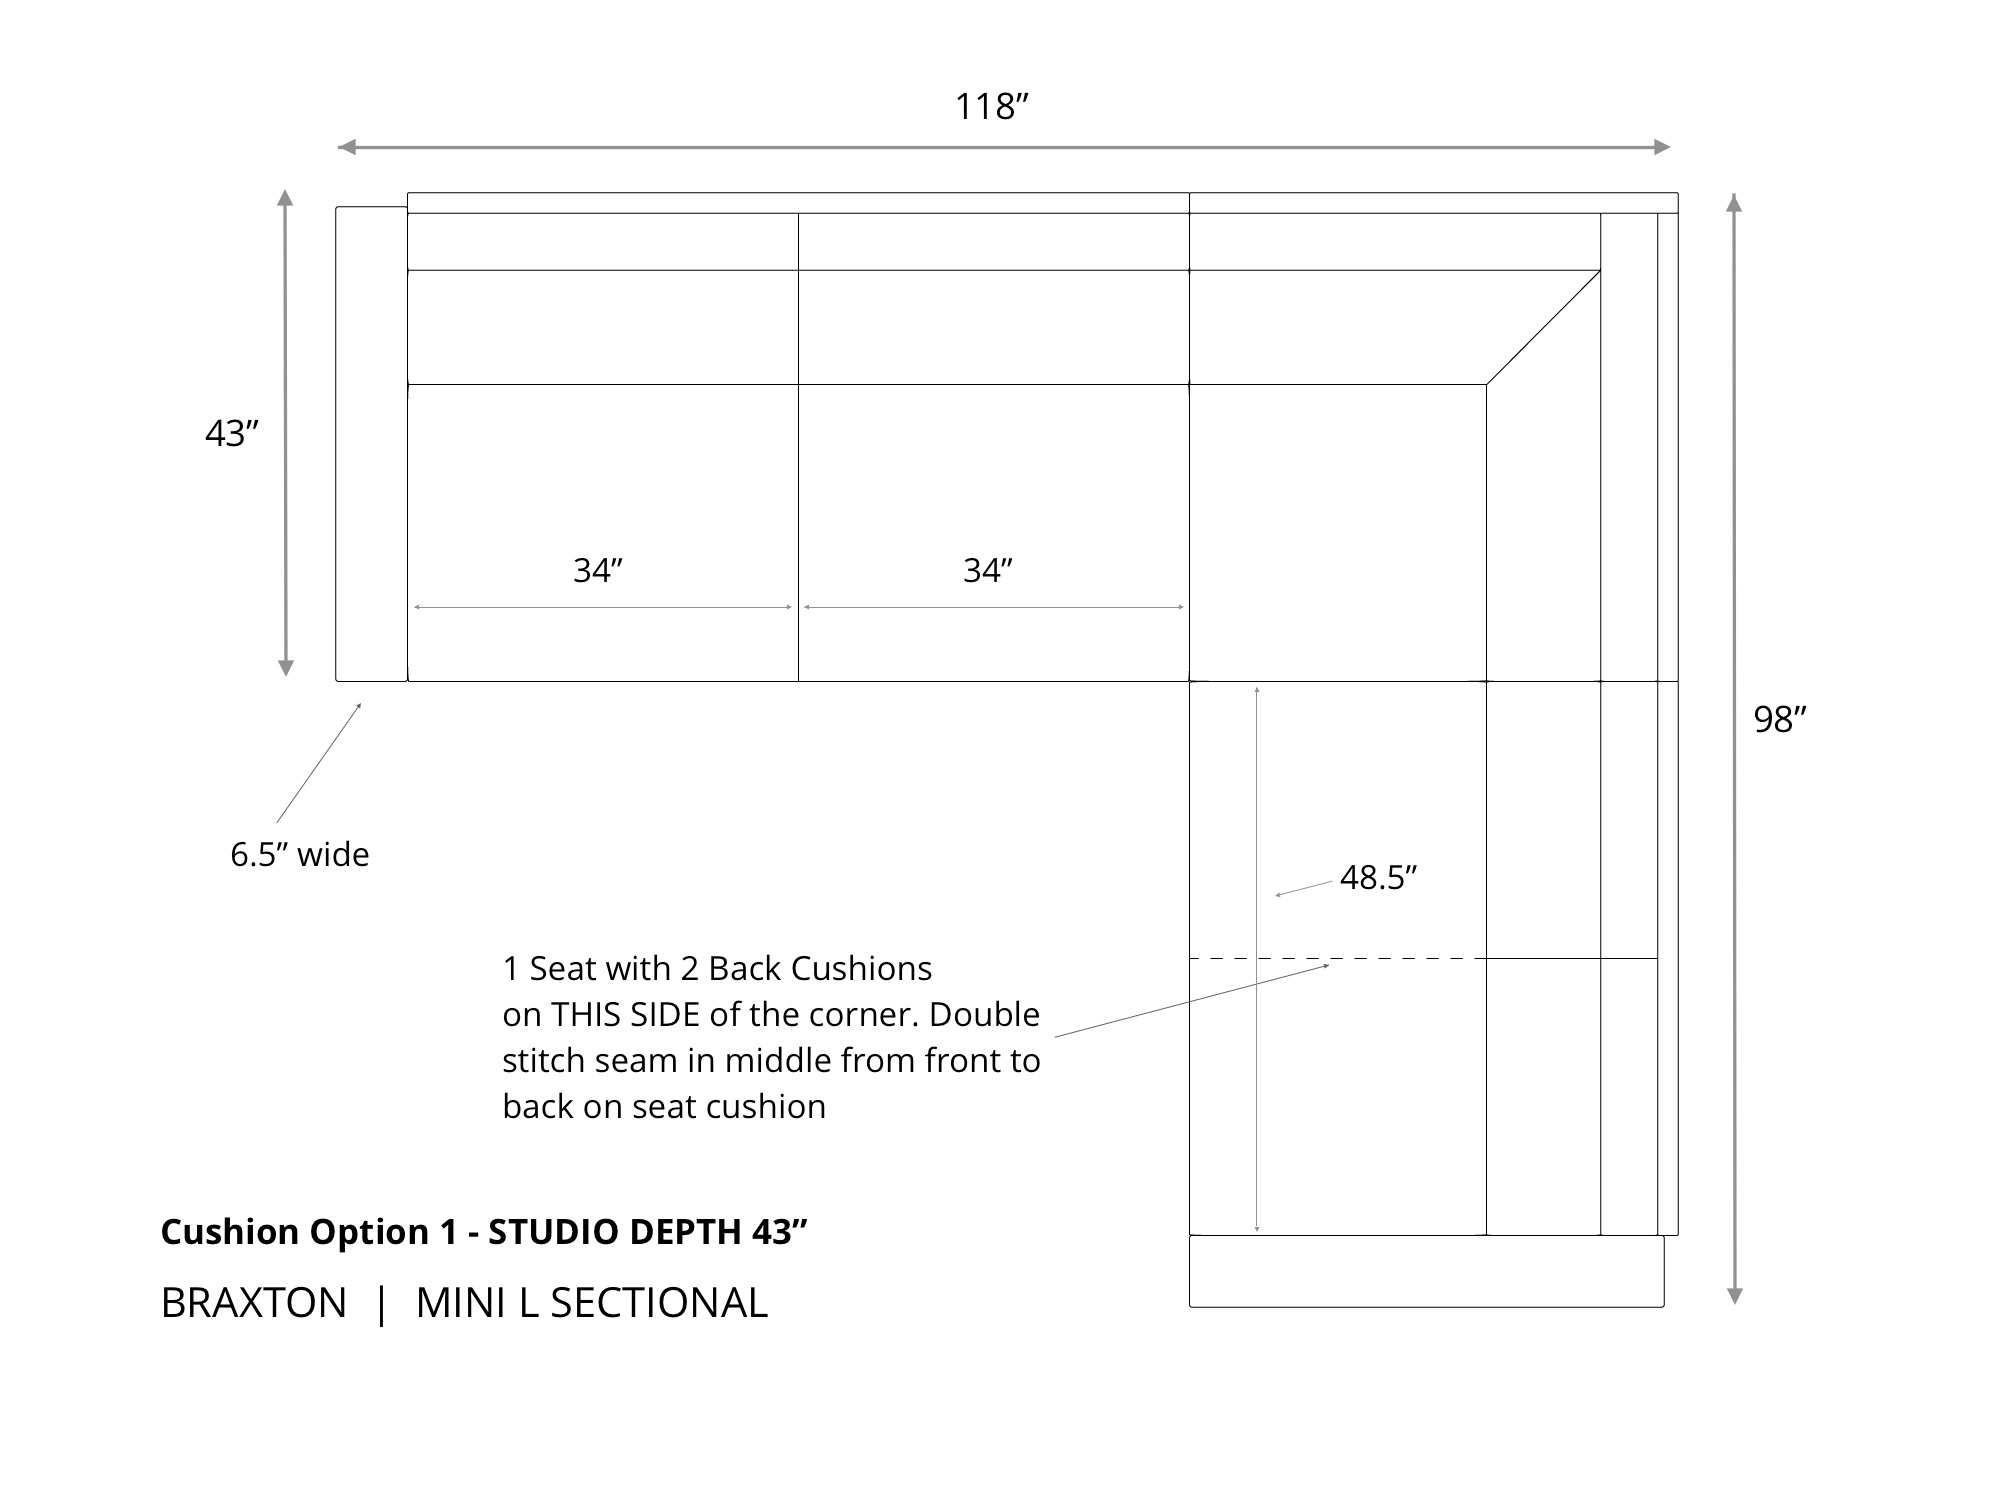 Dimension Diagram - Braxton Mini L Sectional - 43 inch depth - Cushion Option 1